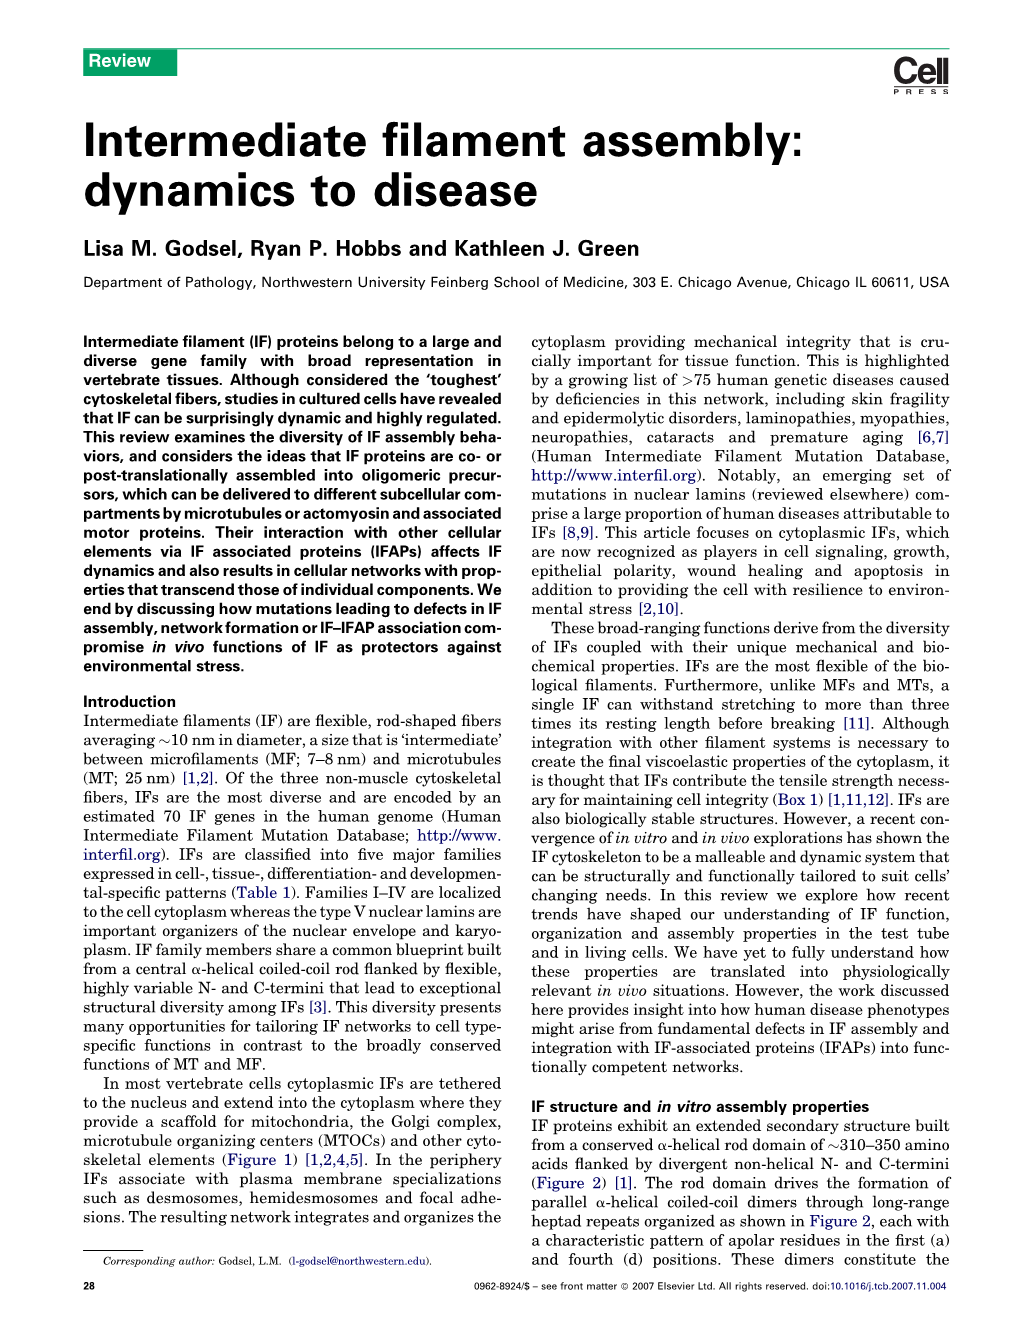 Intermediate Filament Assembly: Dynamics to Disease